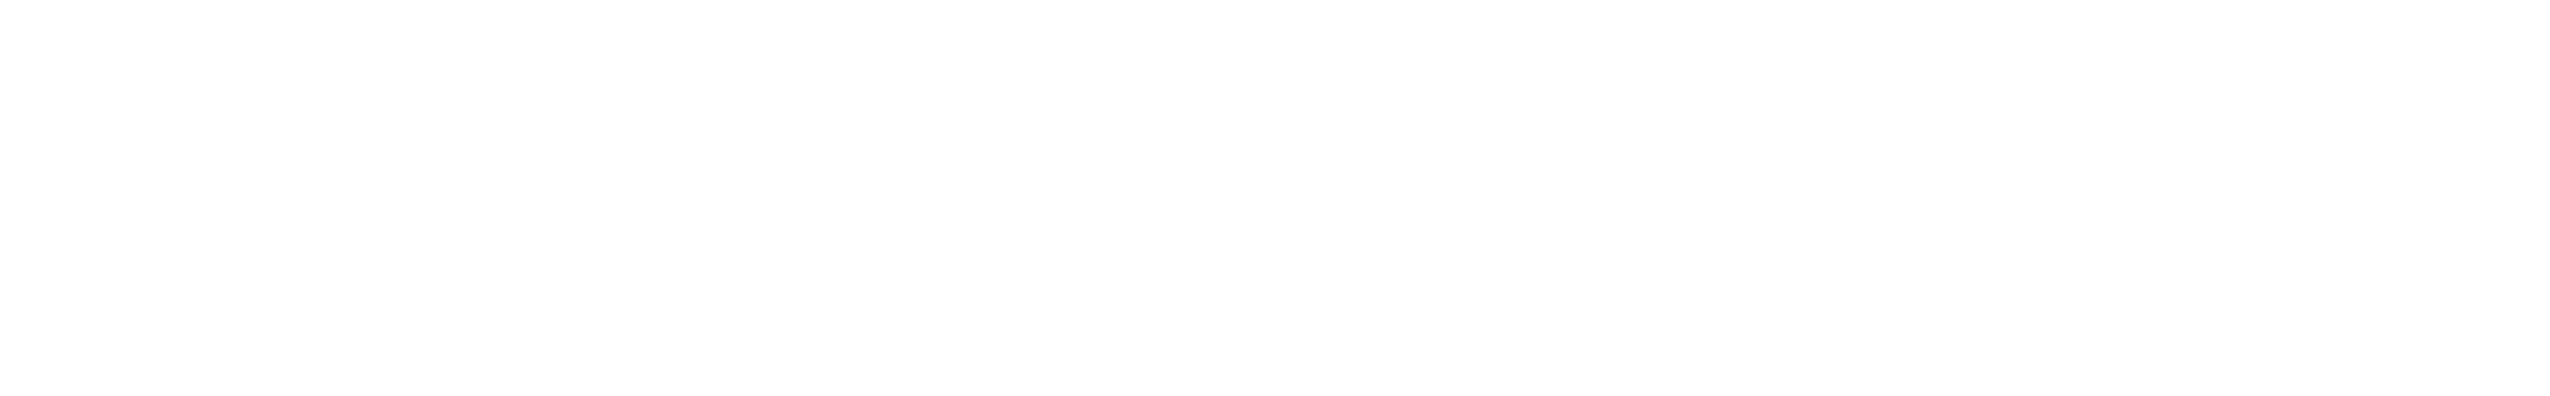 WOB-Transparent-White-Logo.png